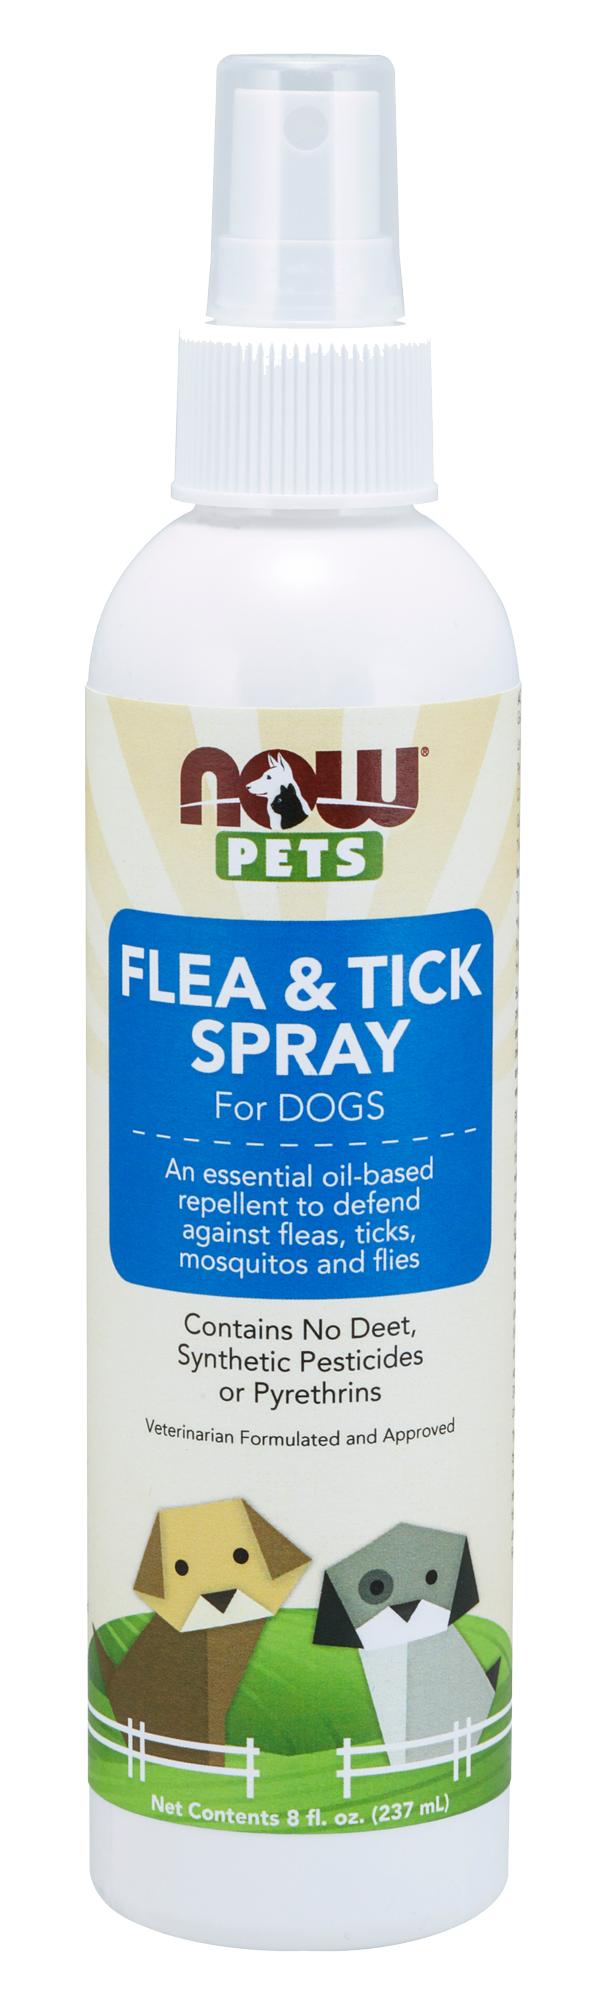 Flea & Tick Spray for Dogs 8 fl oz Curated Wellness